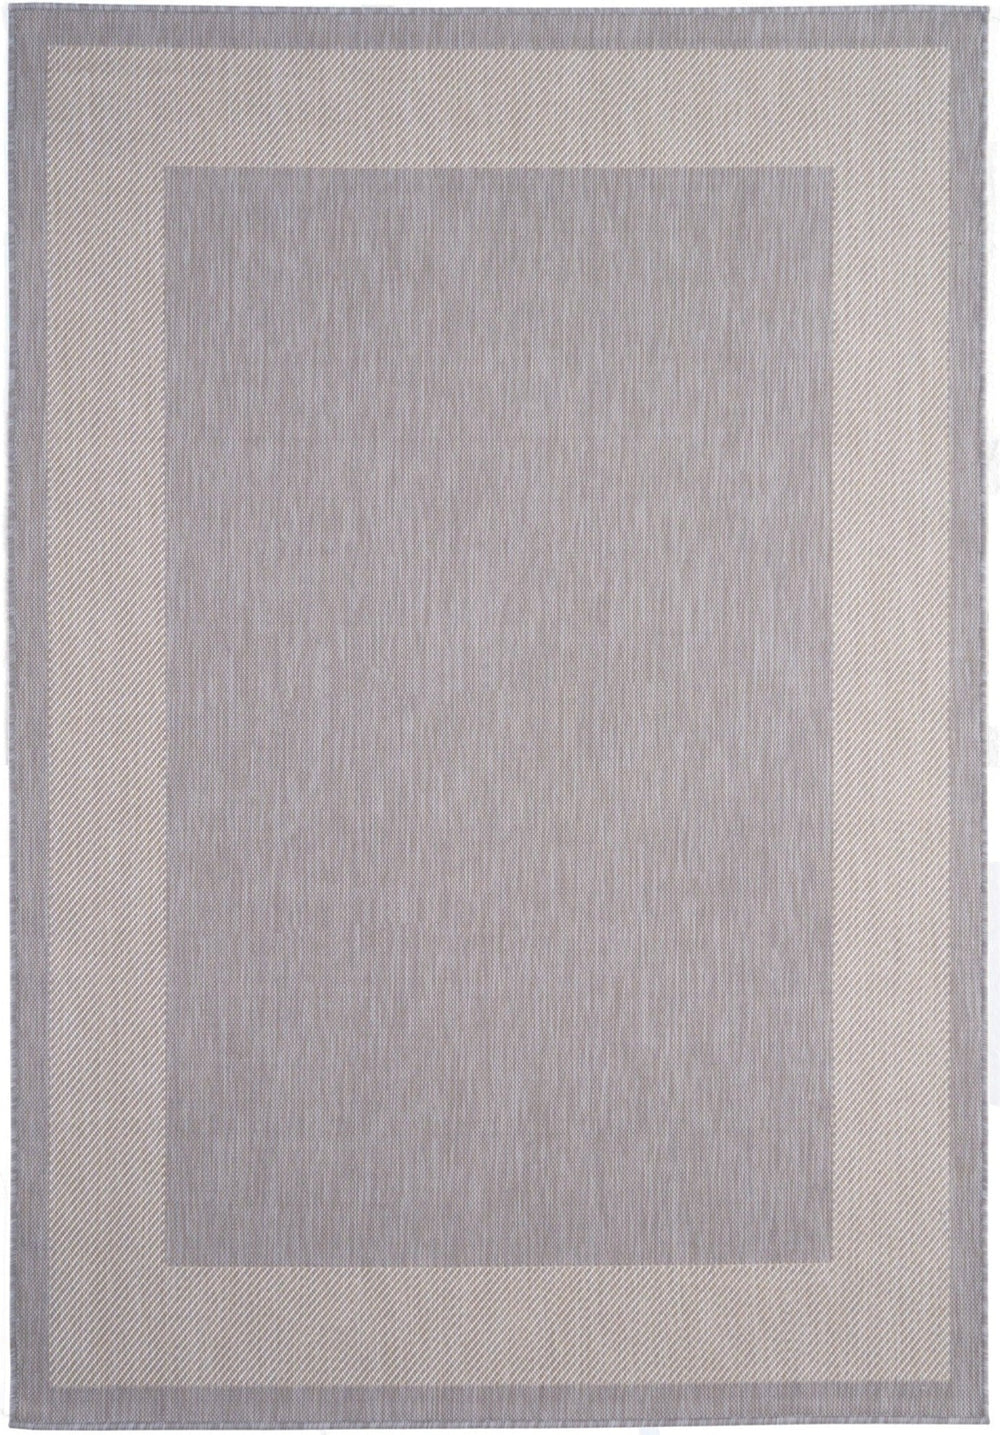 Bordered-design-rug-outdoor-grey